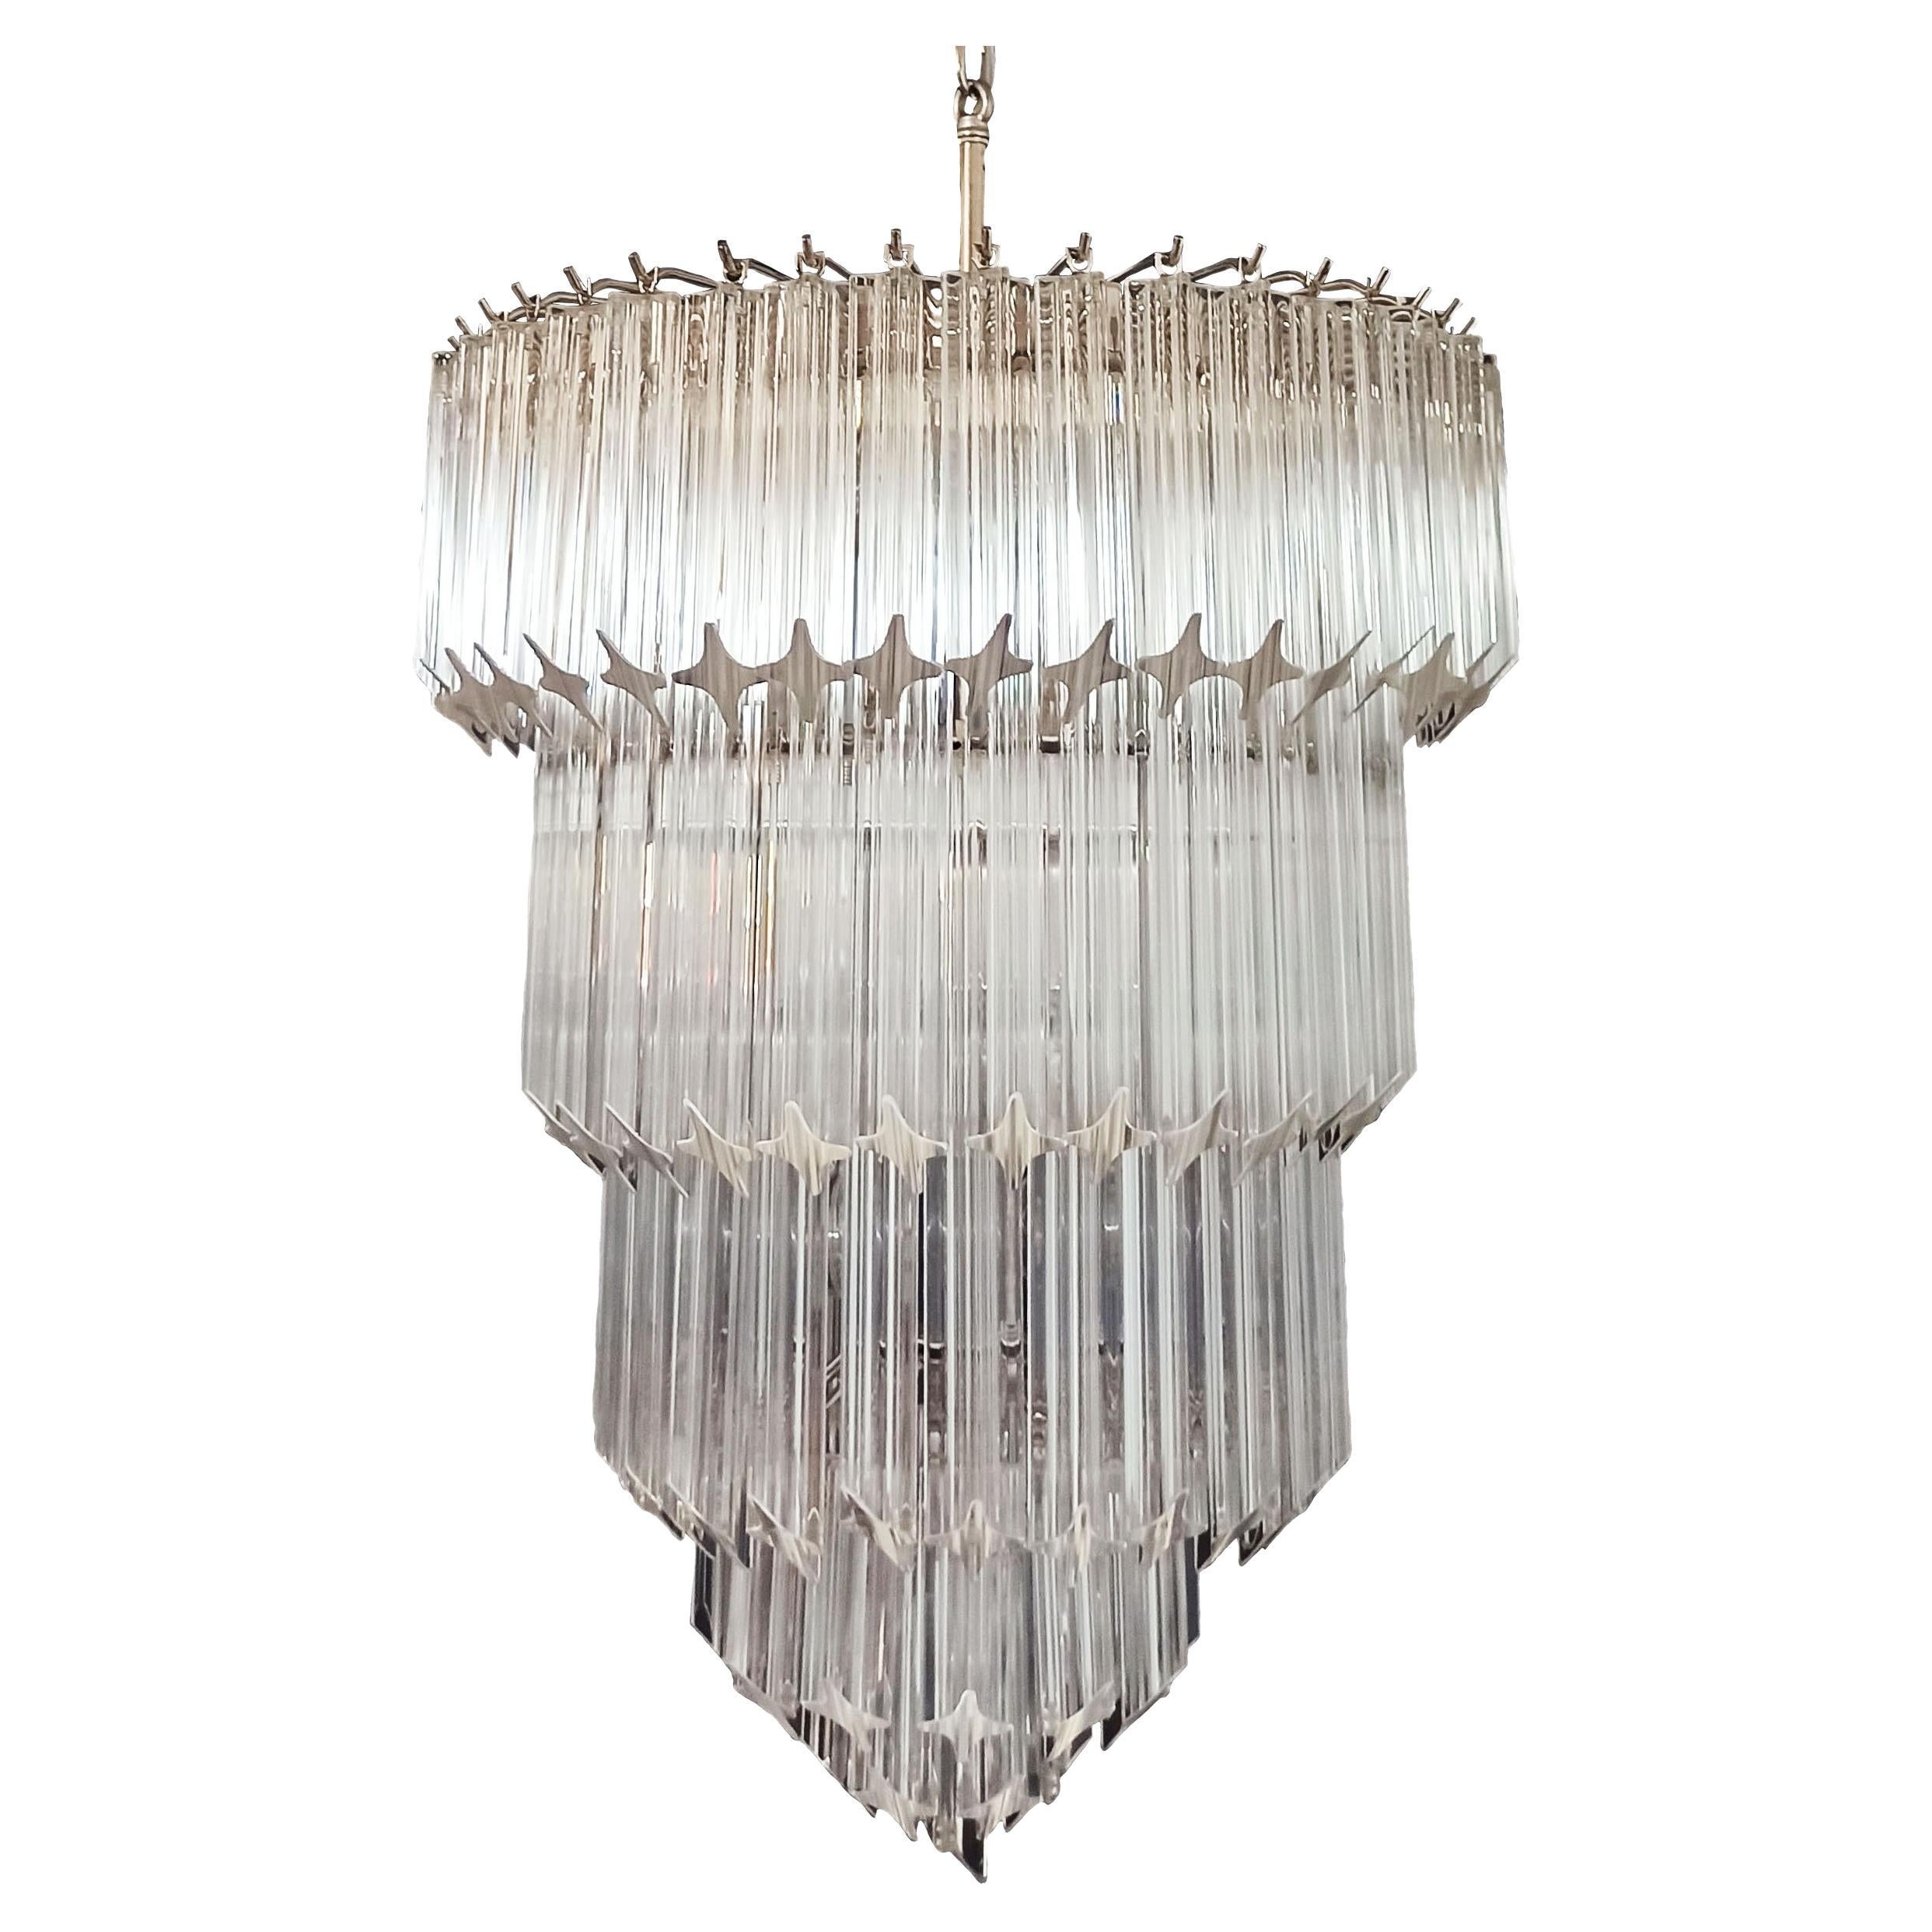 Elegant Stylish Murano glass chandelier - 112 transparent quadriedri